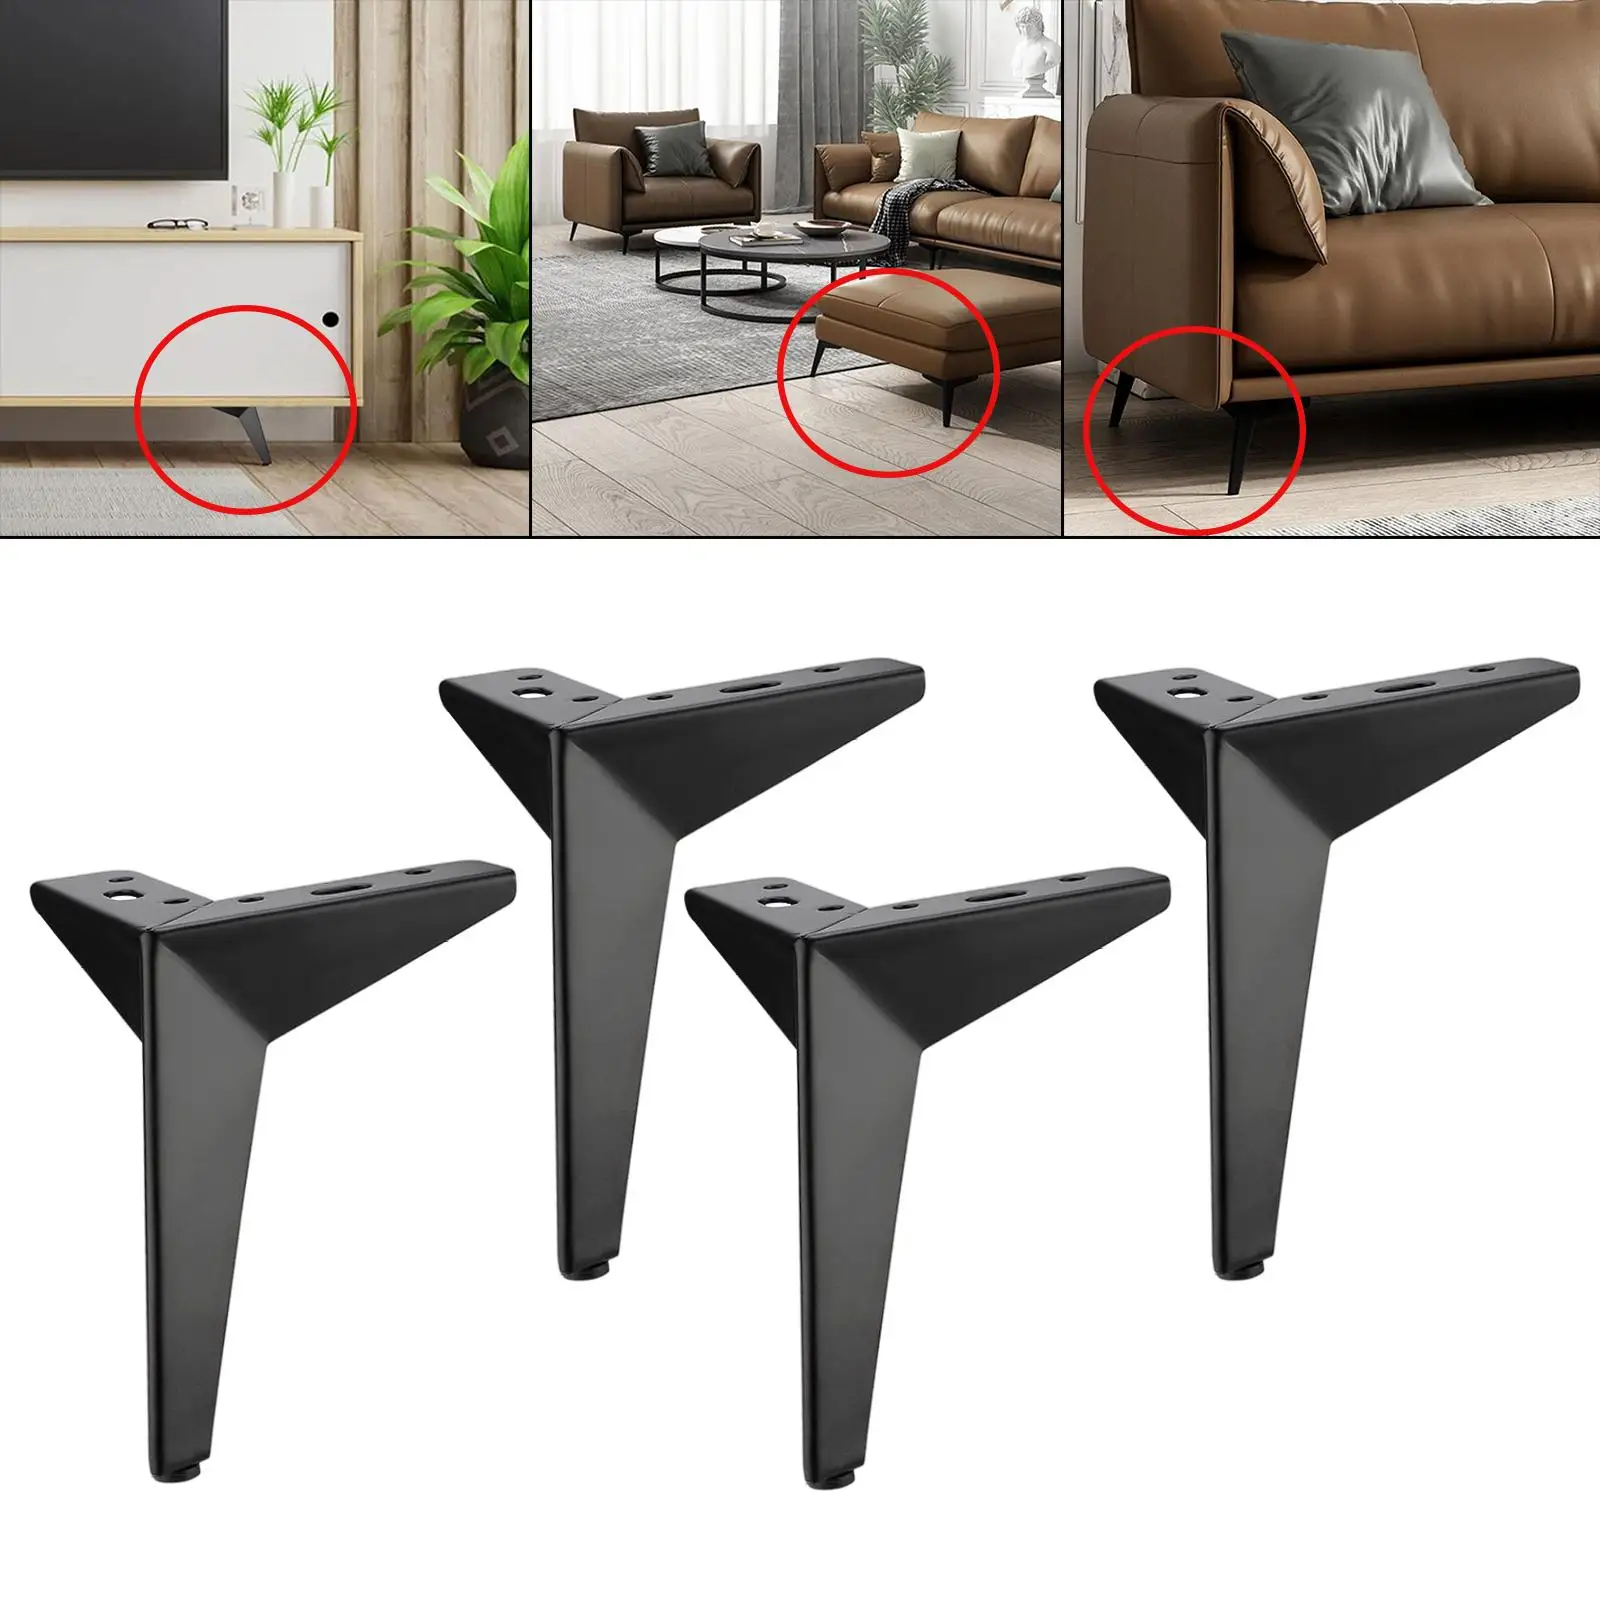 4Pcs Triangle Furniture Legs Loveseat Couch Leg for Ottoman, Cupboard, Furniture,